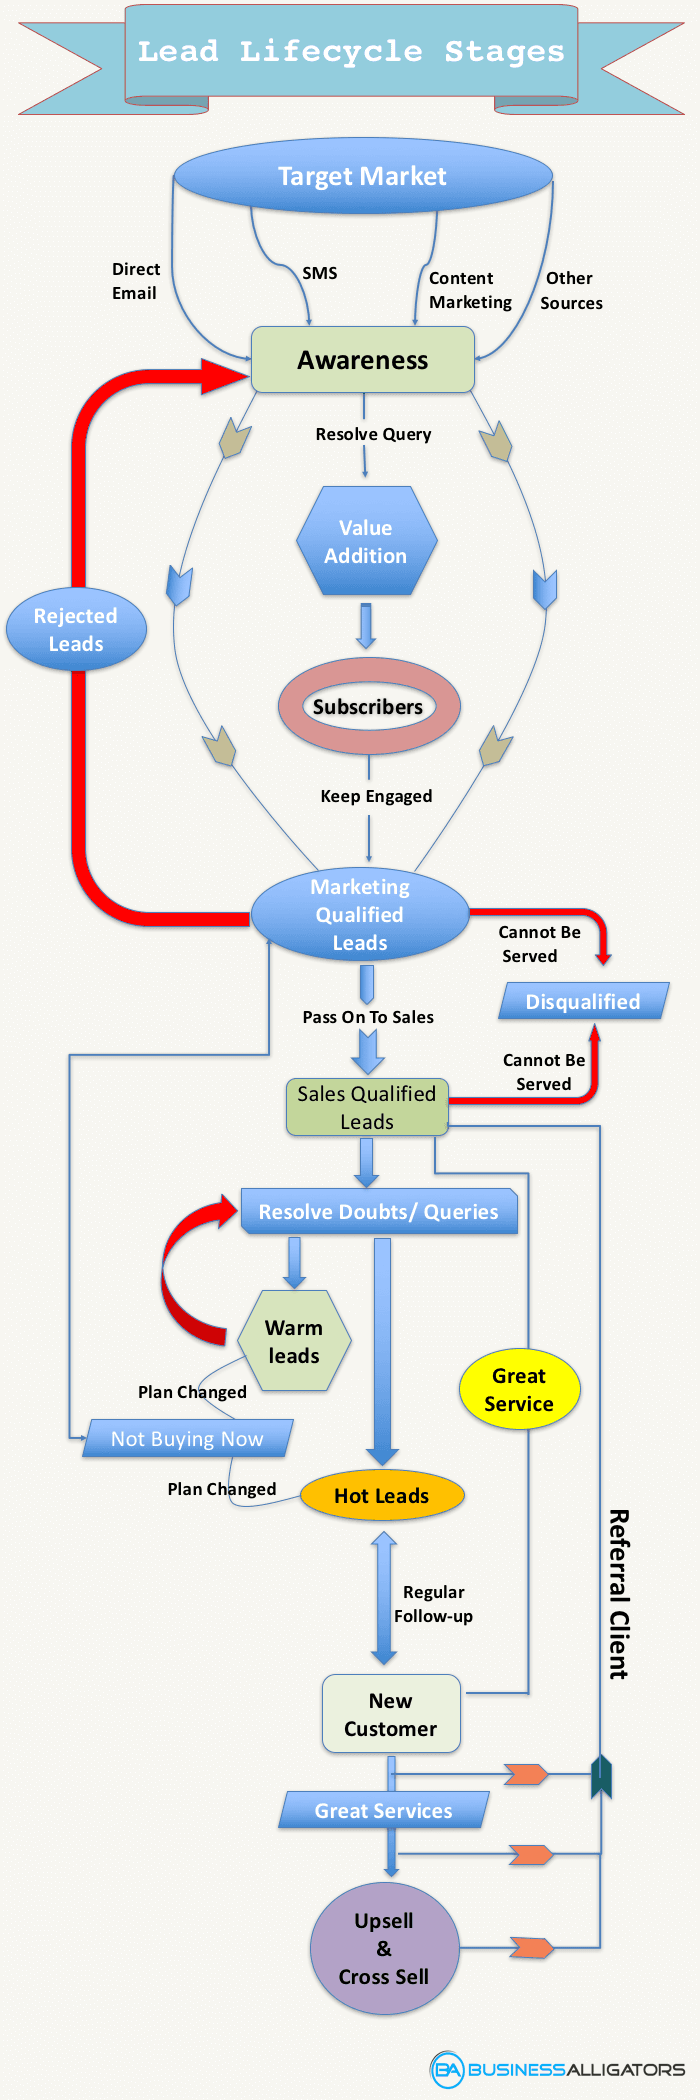 lead lifecycle stages, lead nurturing, lead conversion stages, lead lifecycle